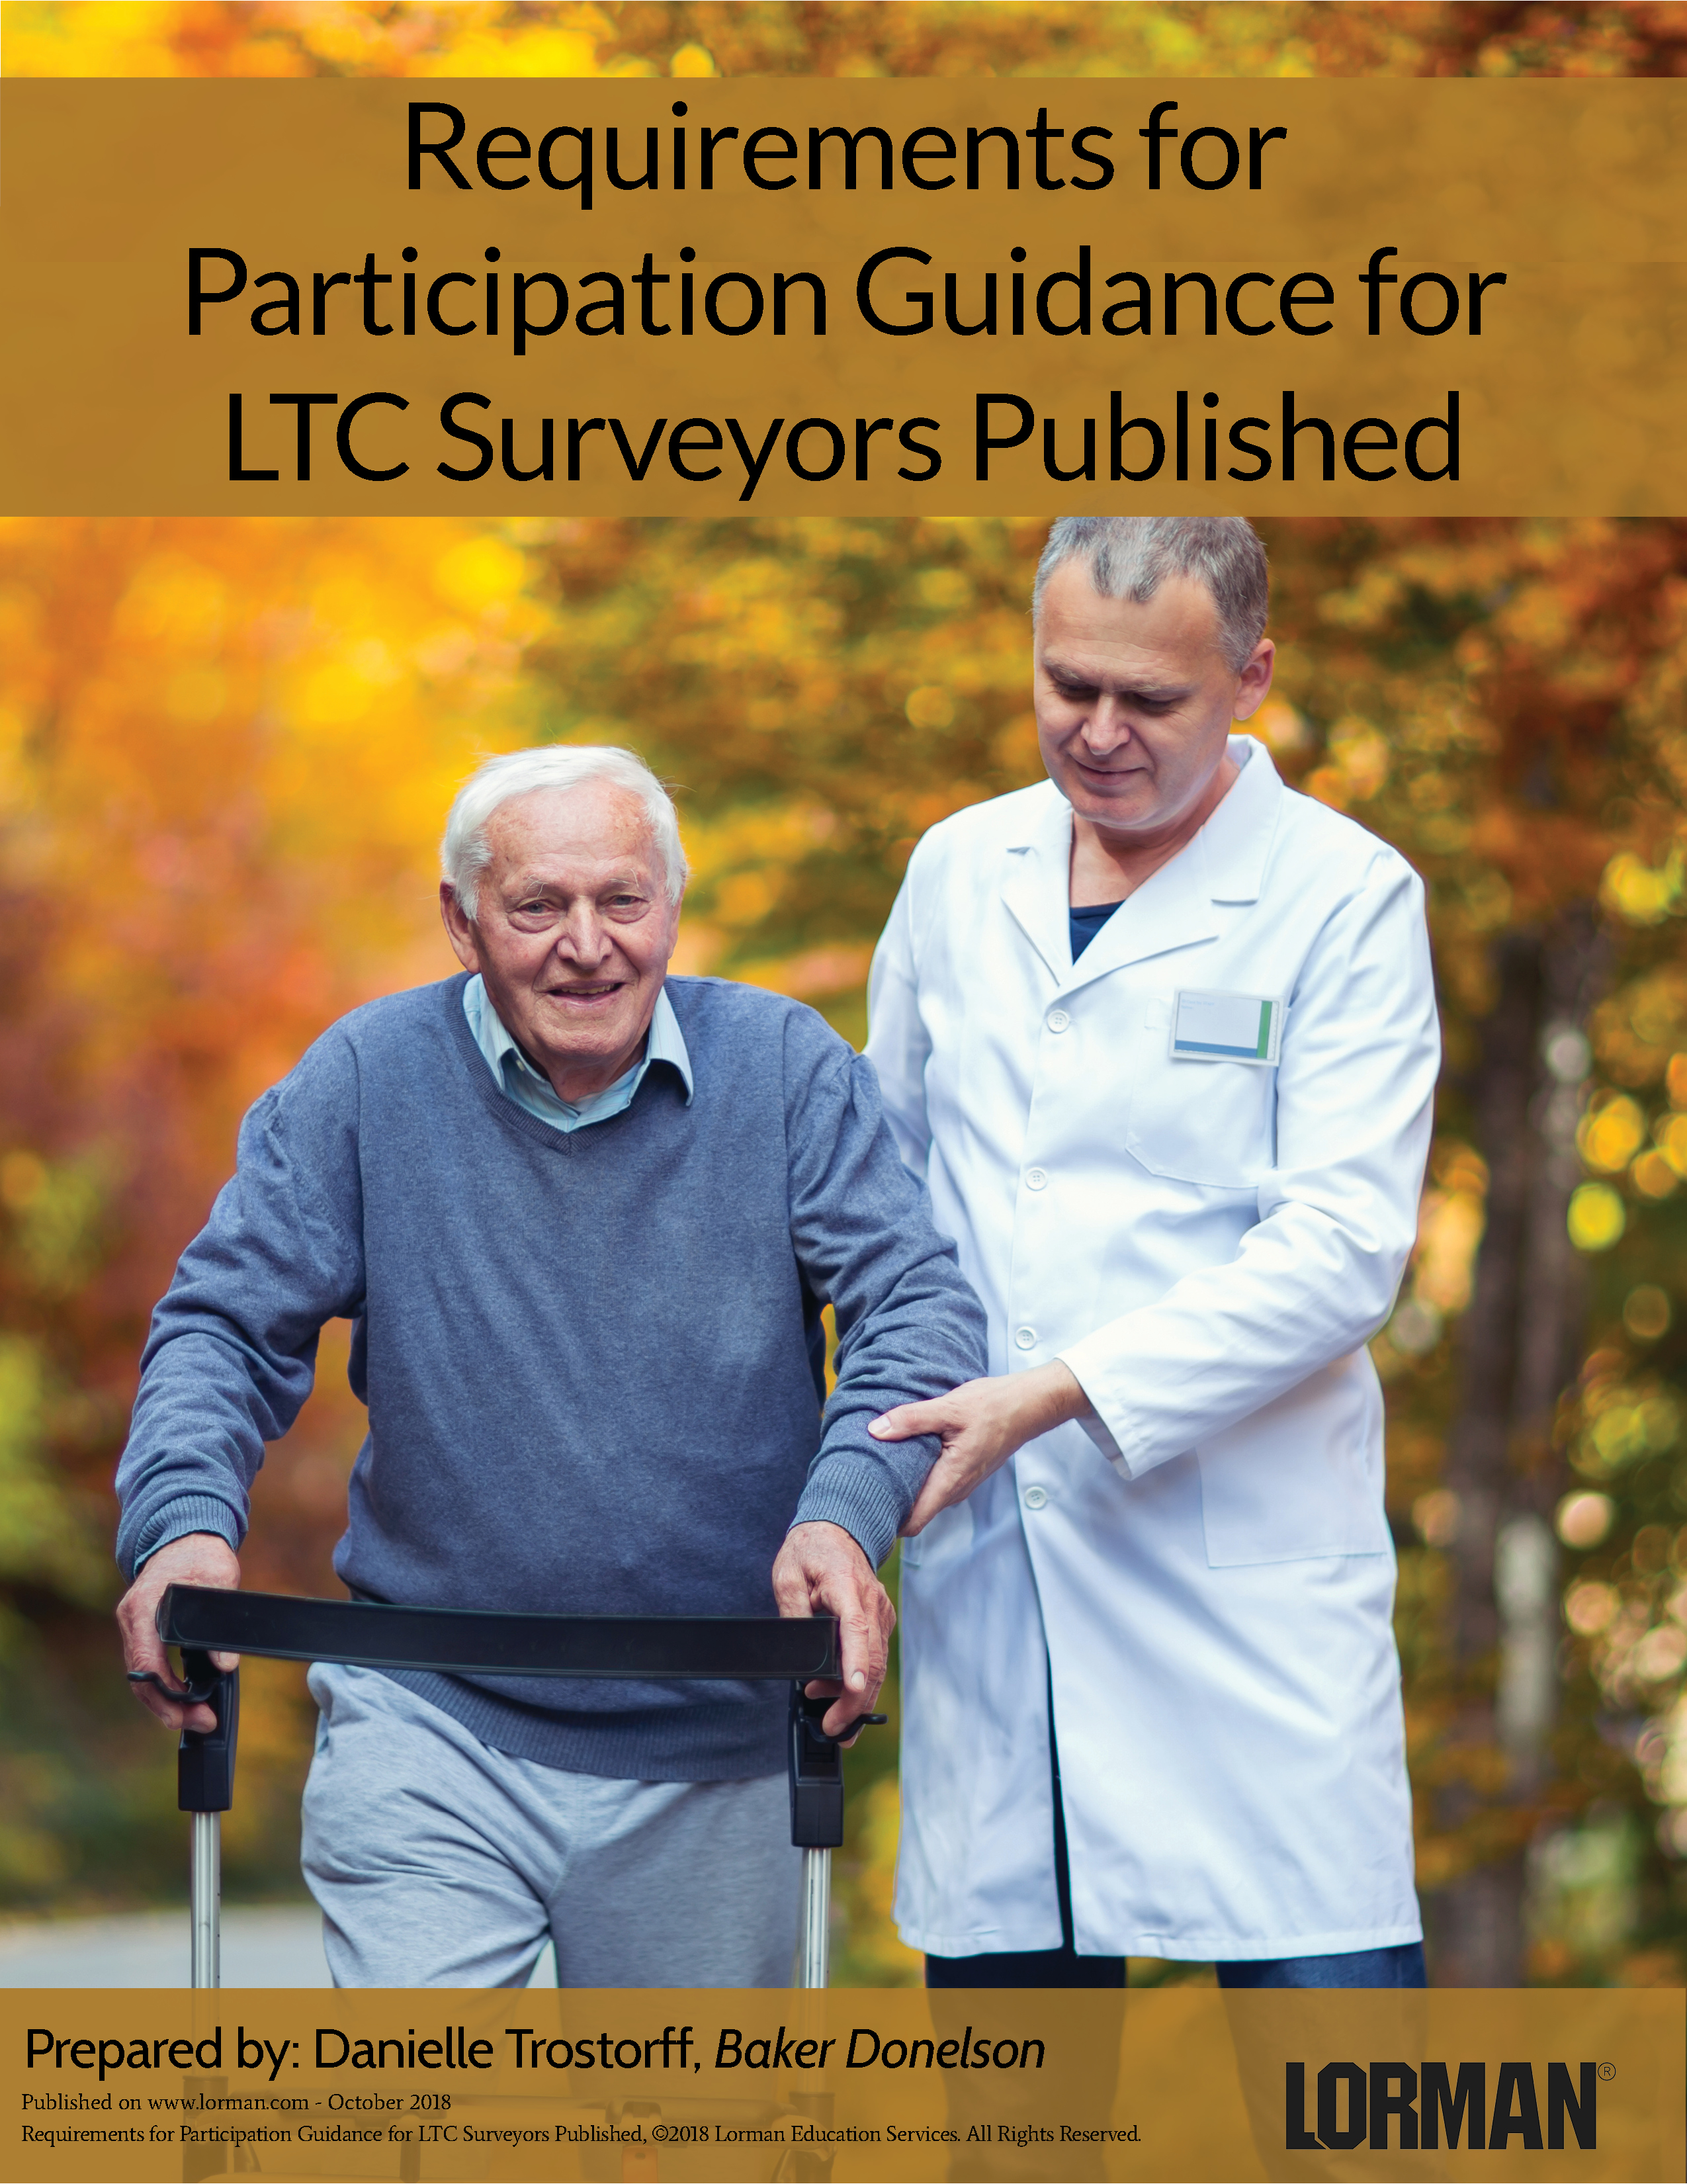 Requirements for Participation Guidance for LTC Surveyors Published